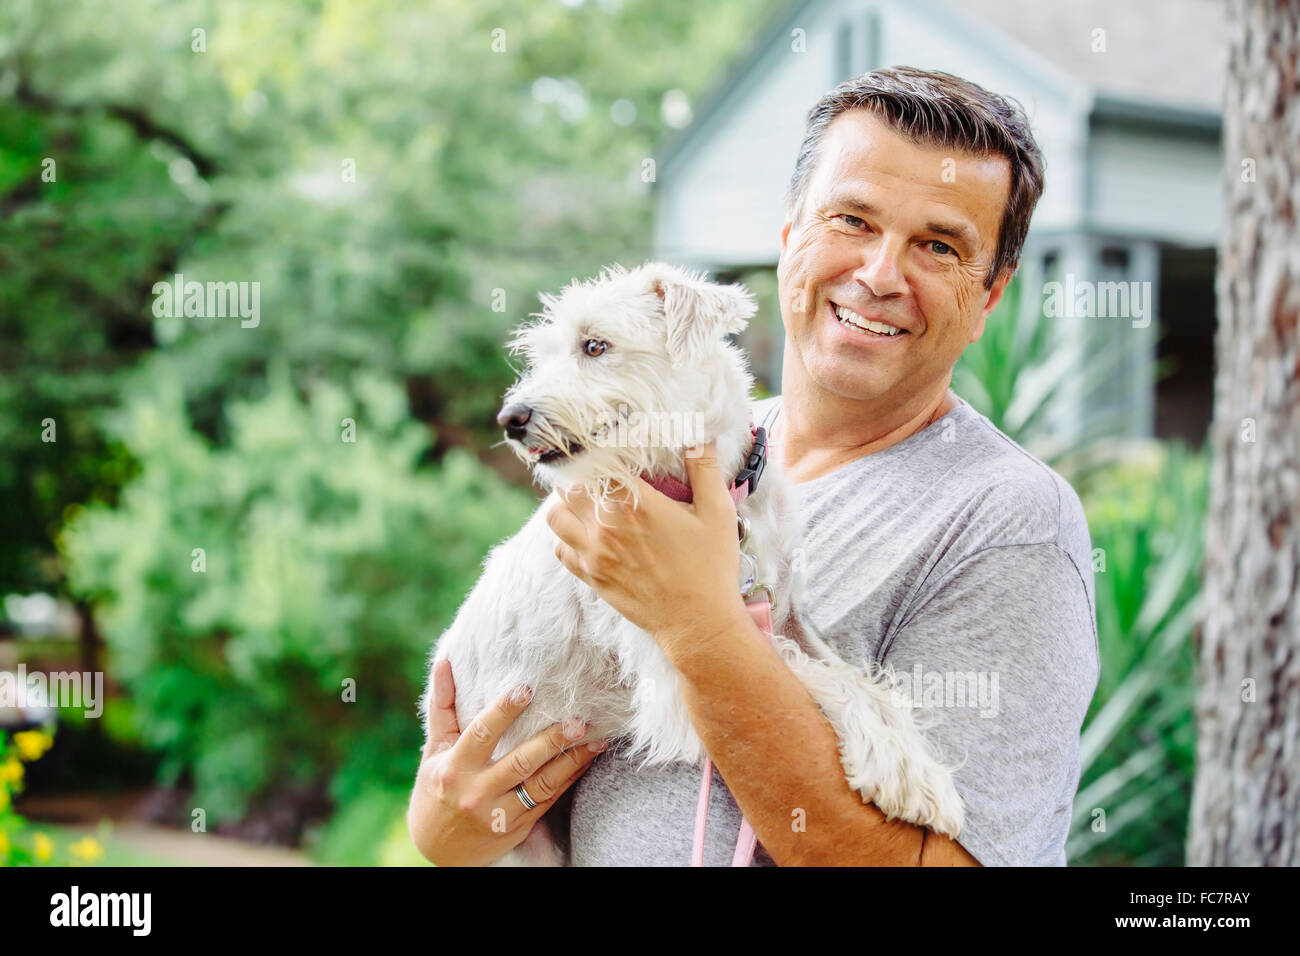 Caucasian man petting dog outdoors Banque D'Images